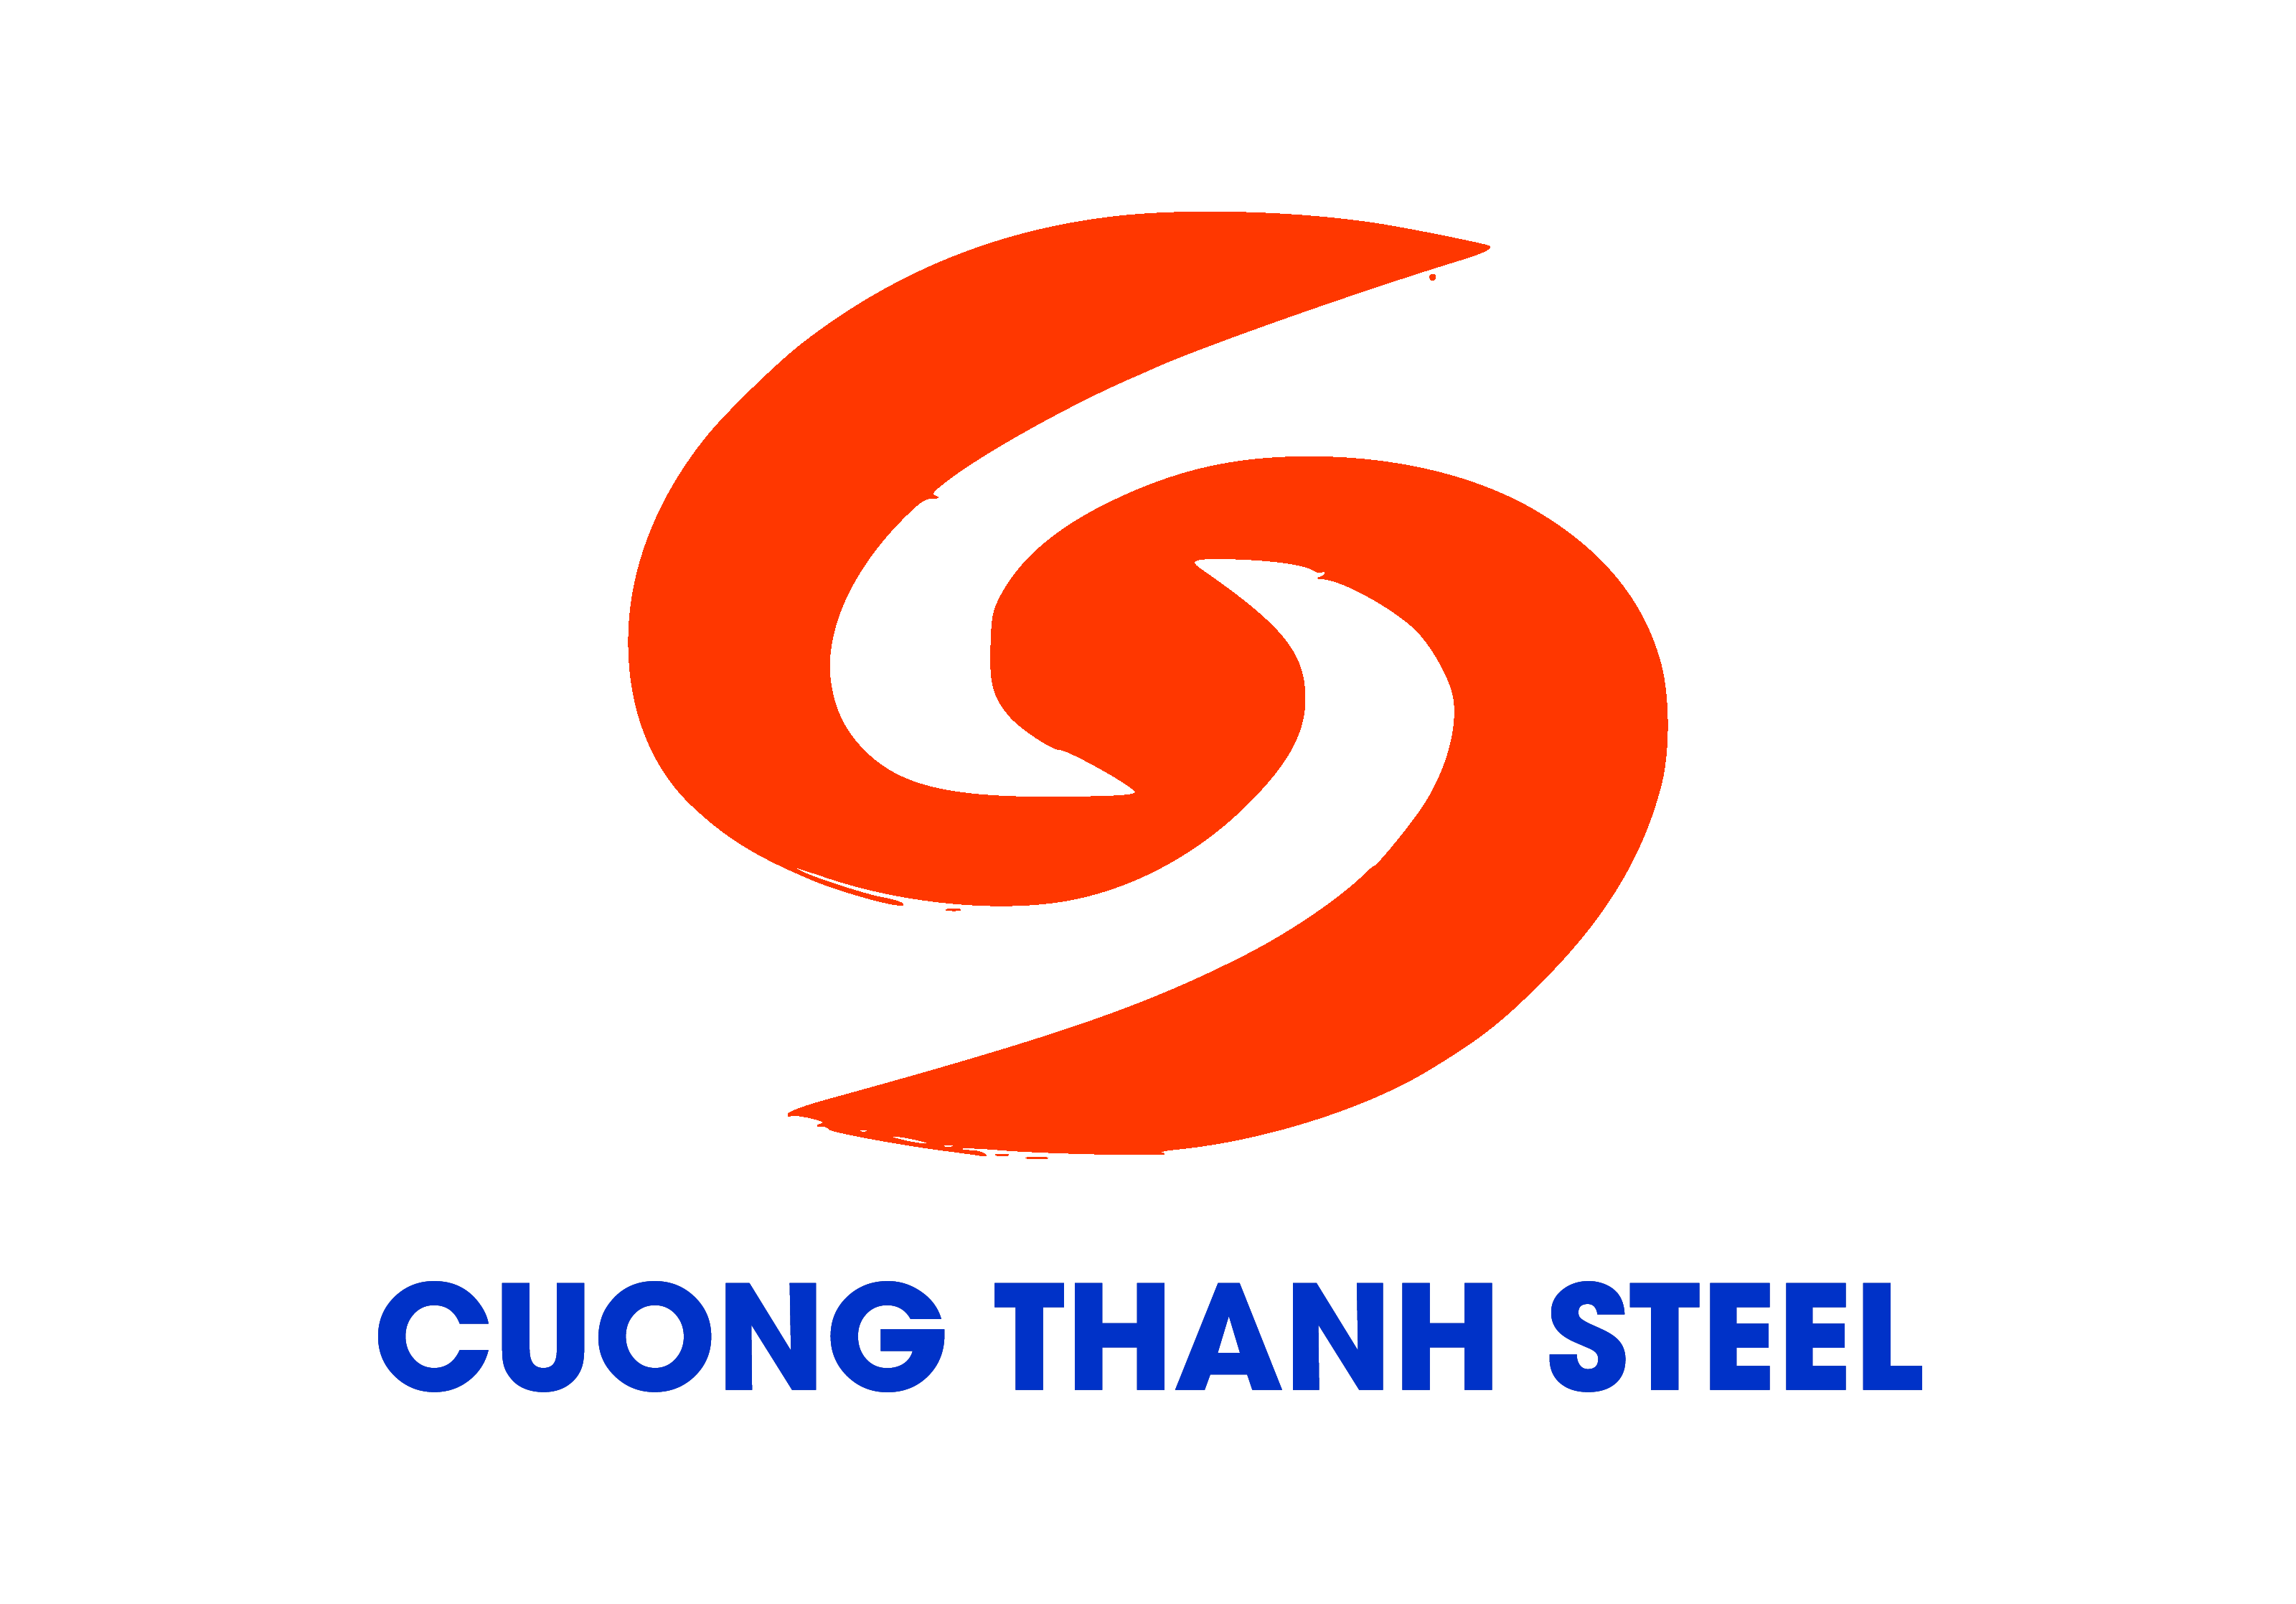 Cường Thanh Steel